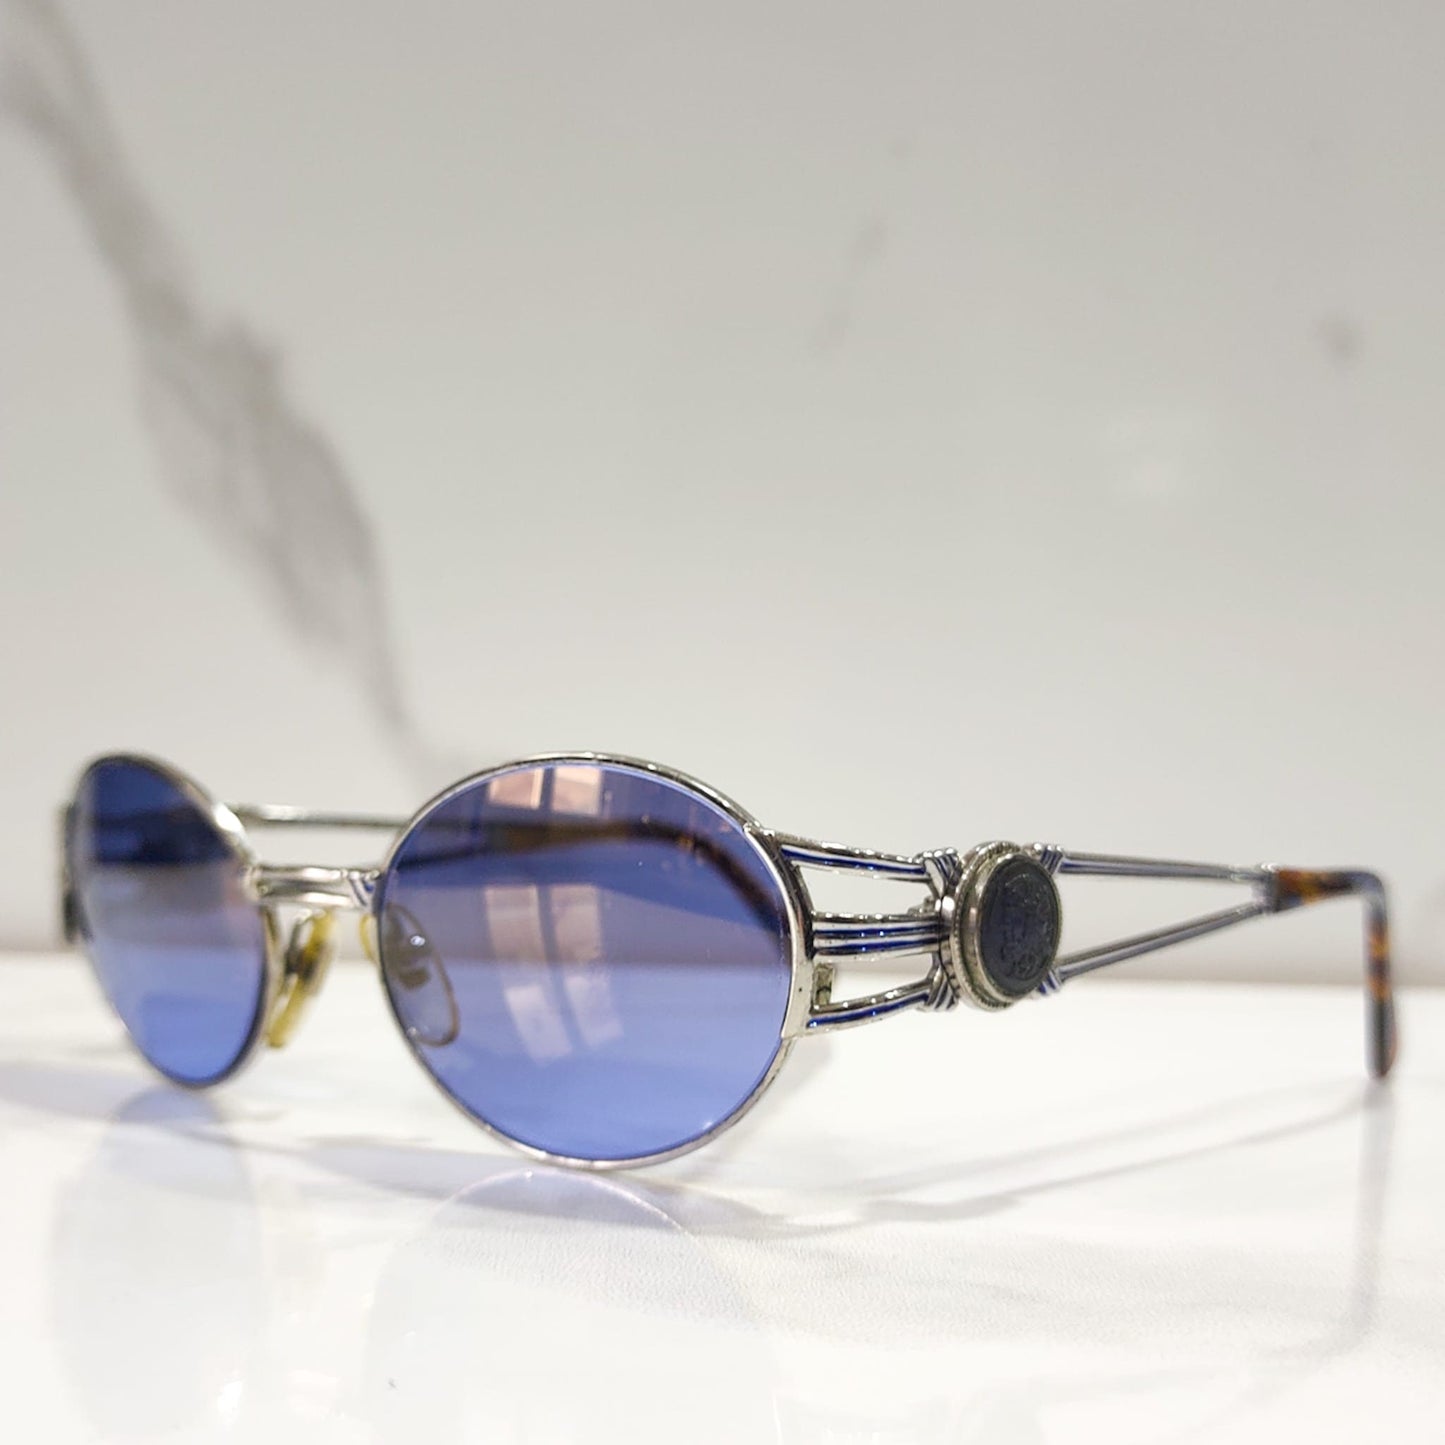 Fendi SL7035 occhiali da sole vintage lunetta brille occhiali sole gafas